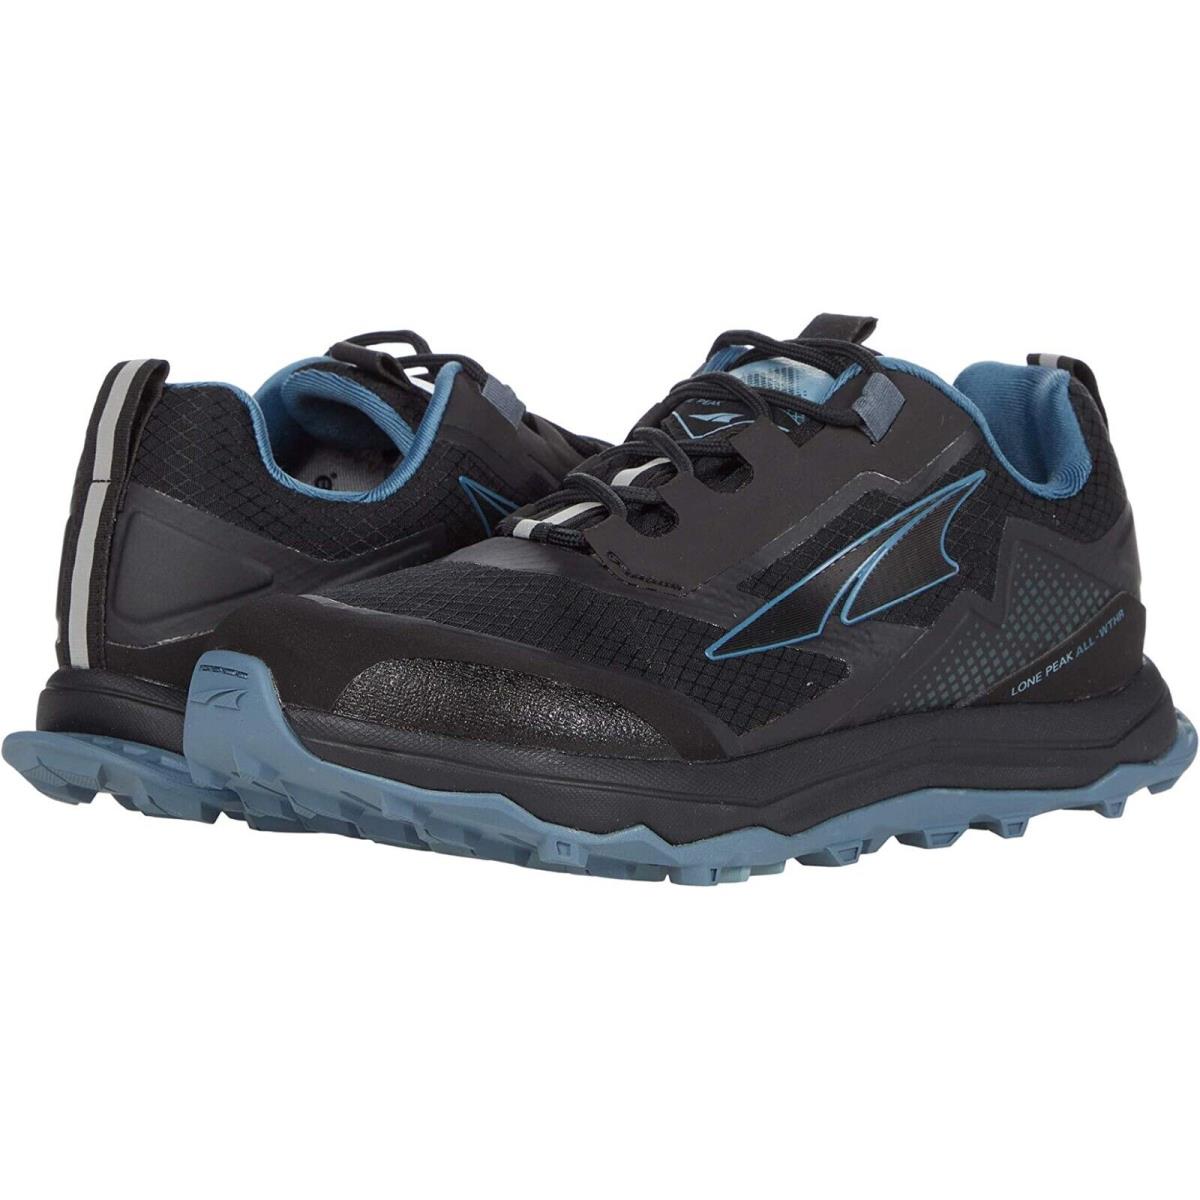 Altra N7823 Womens Black/blue Lone Peak All Weather Shoes Size US 6 EU 37